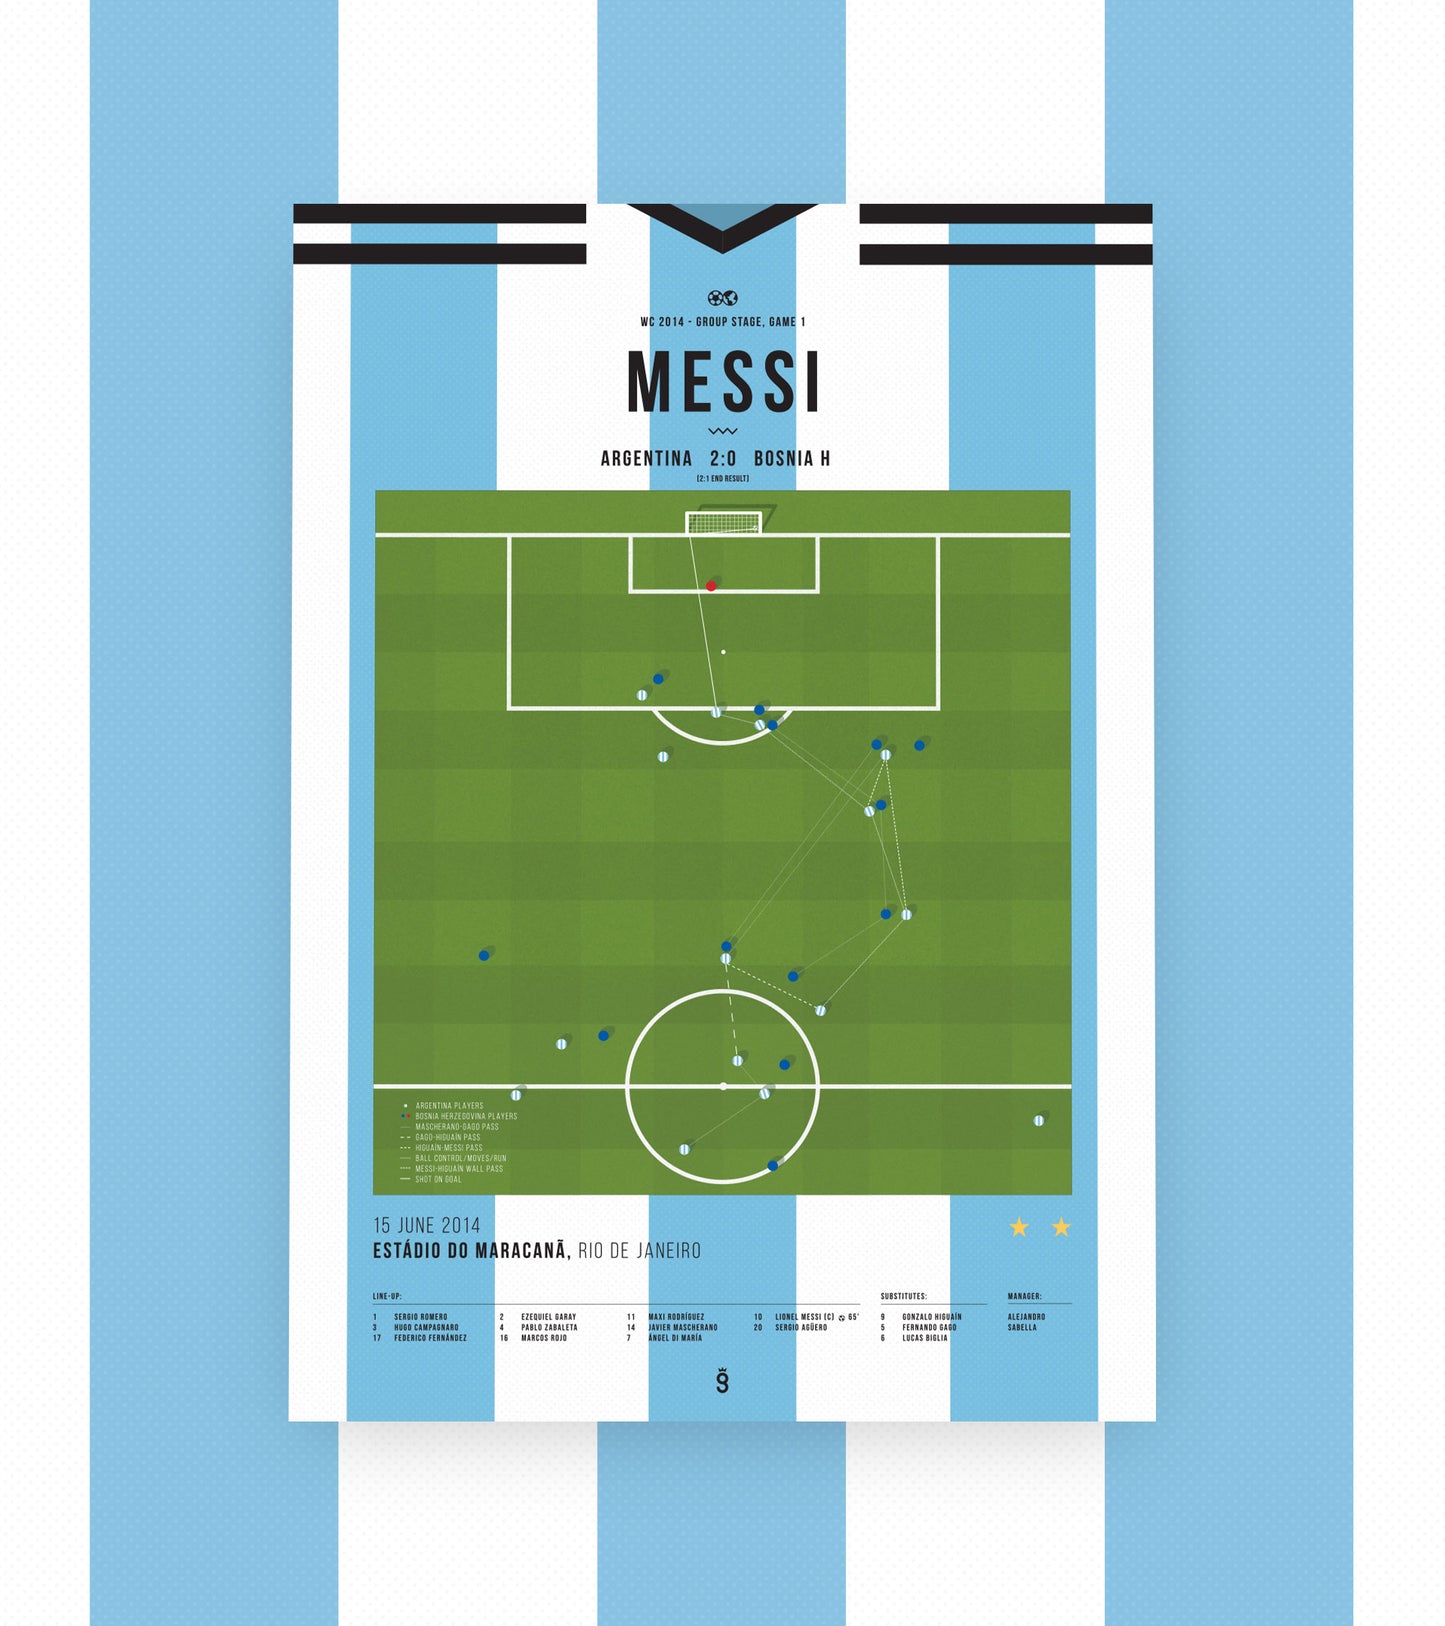 Messi goal against Bosnia and Herzegovina